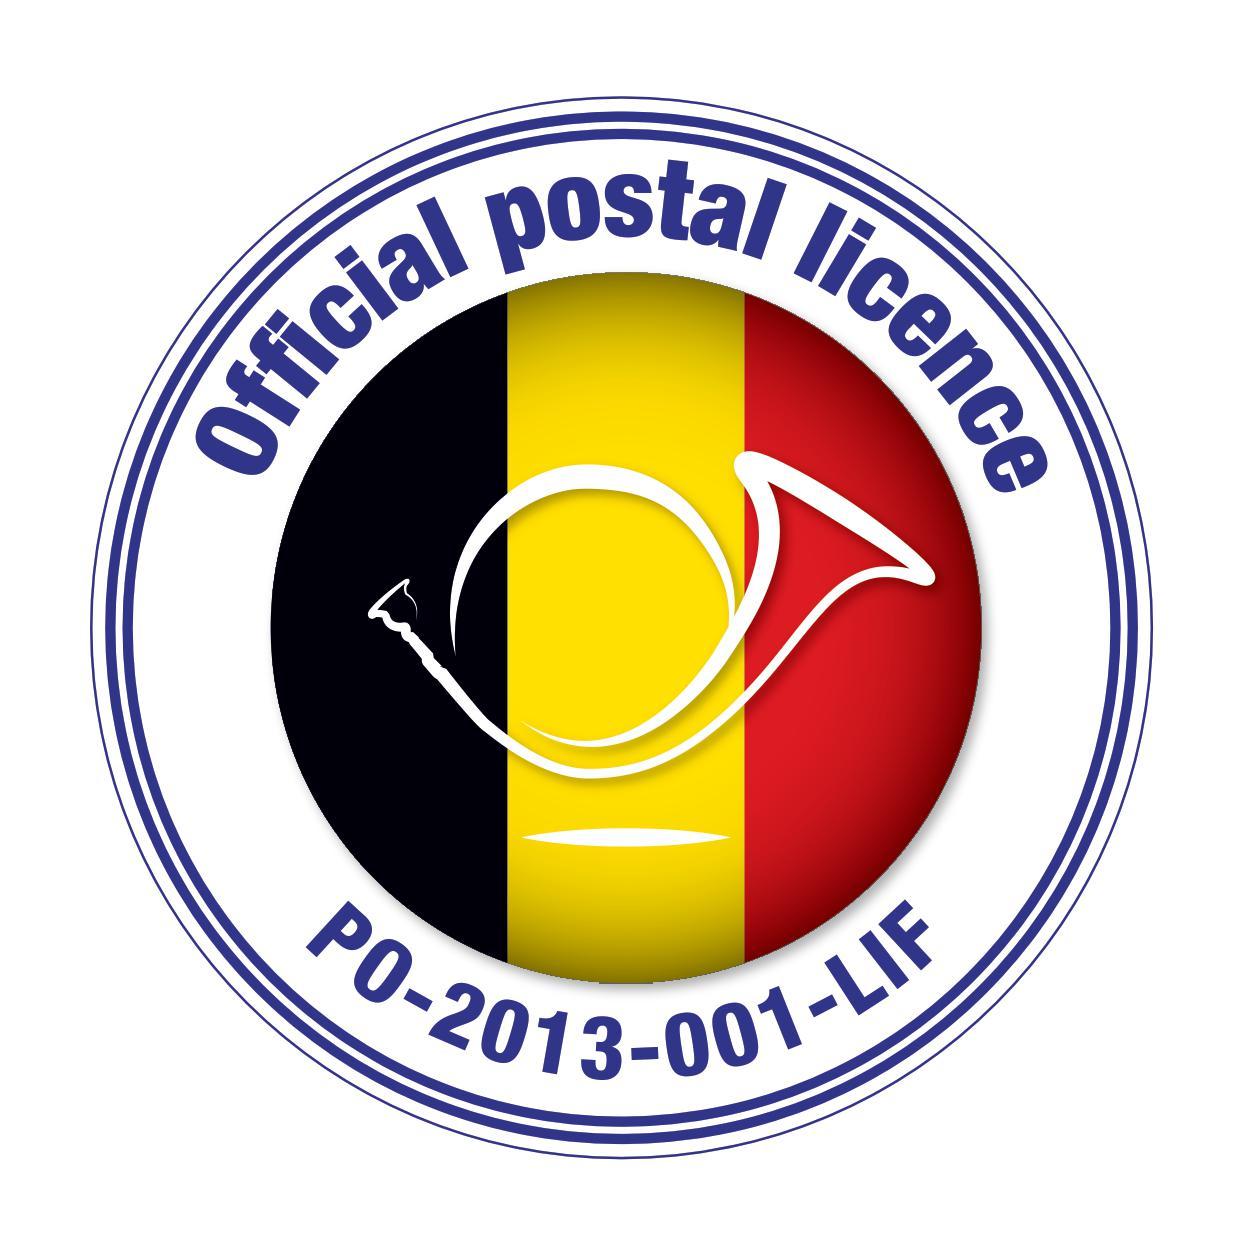 Individuele postvergunning sinds 22 mei 2013